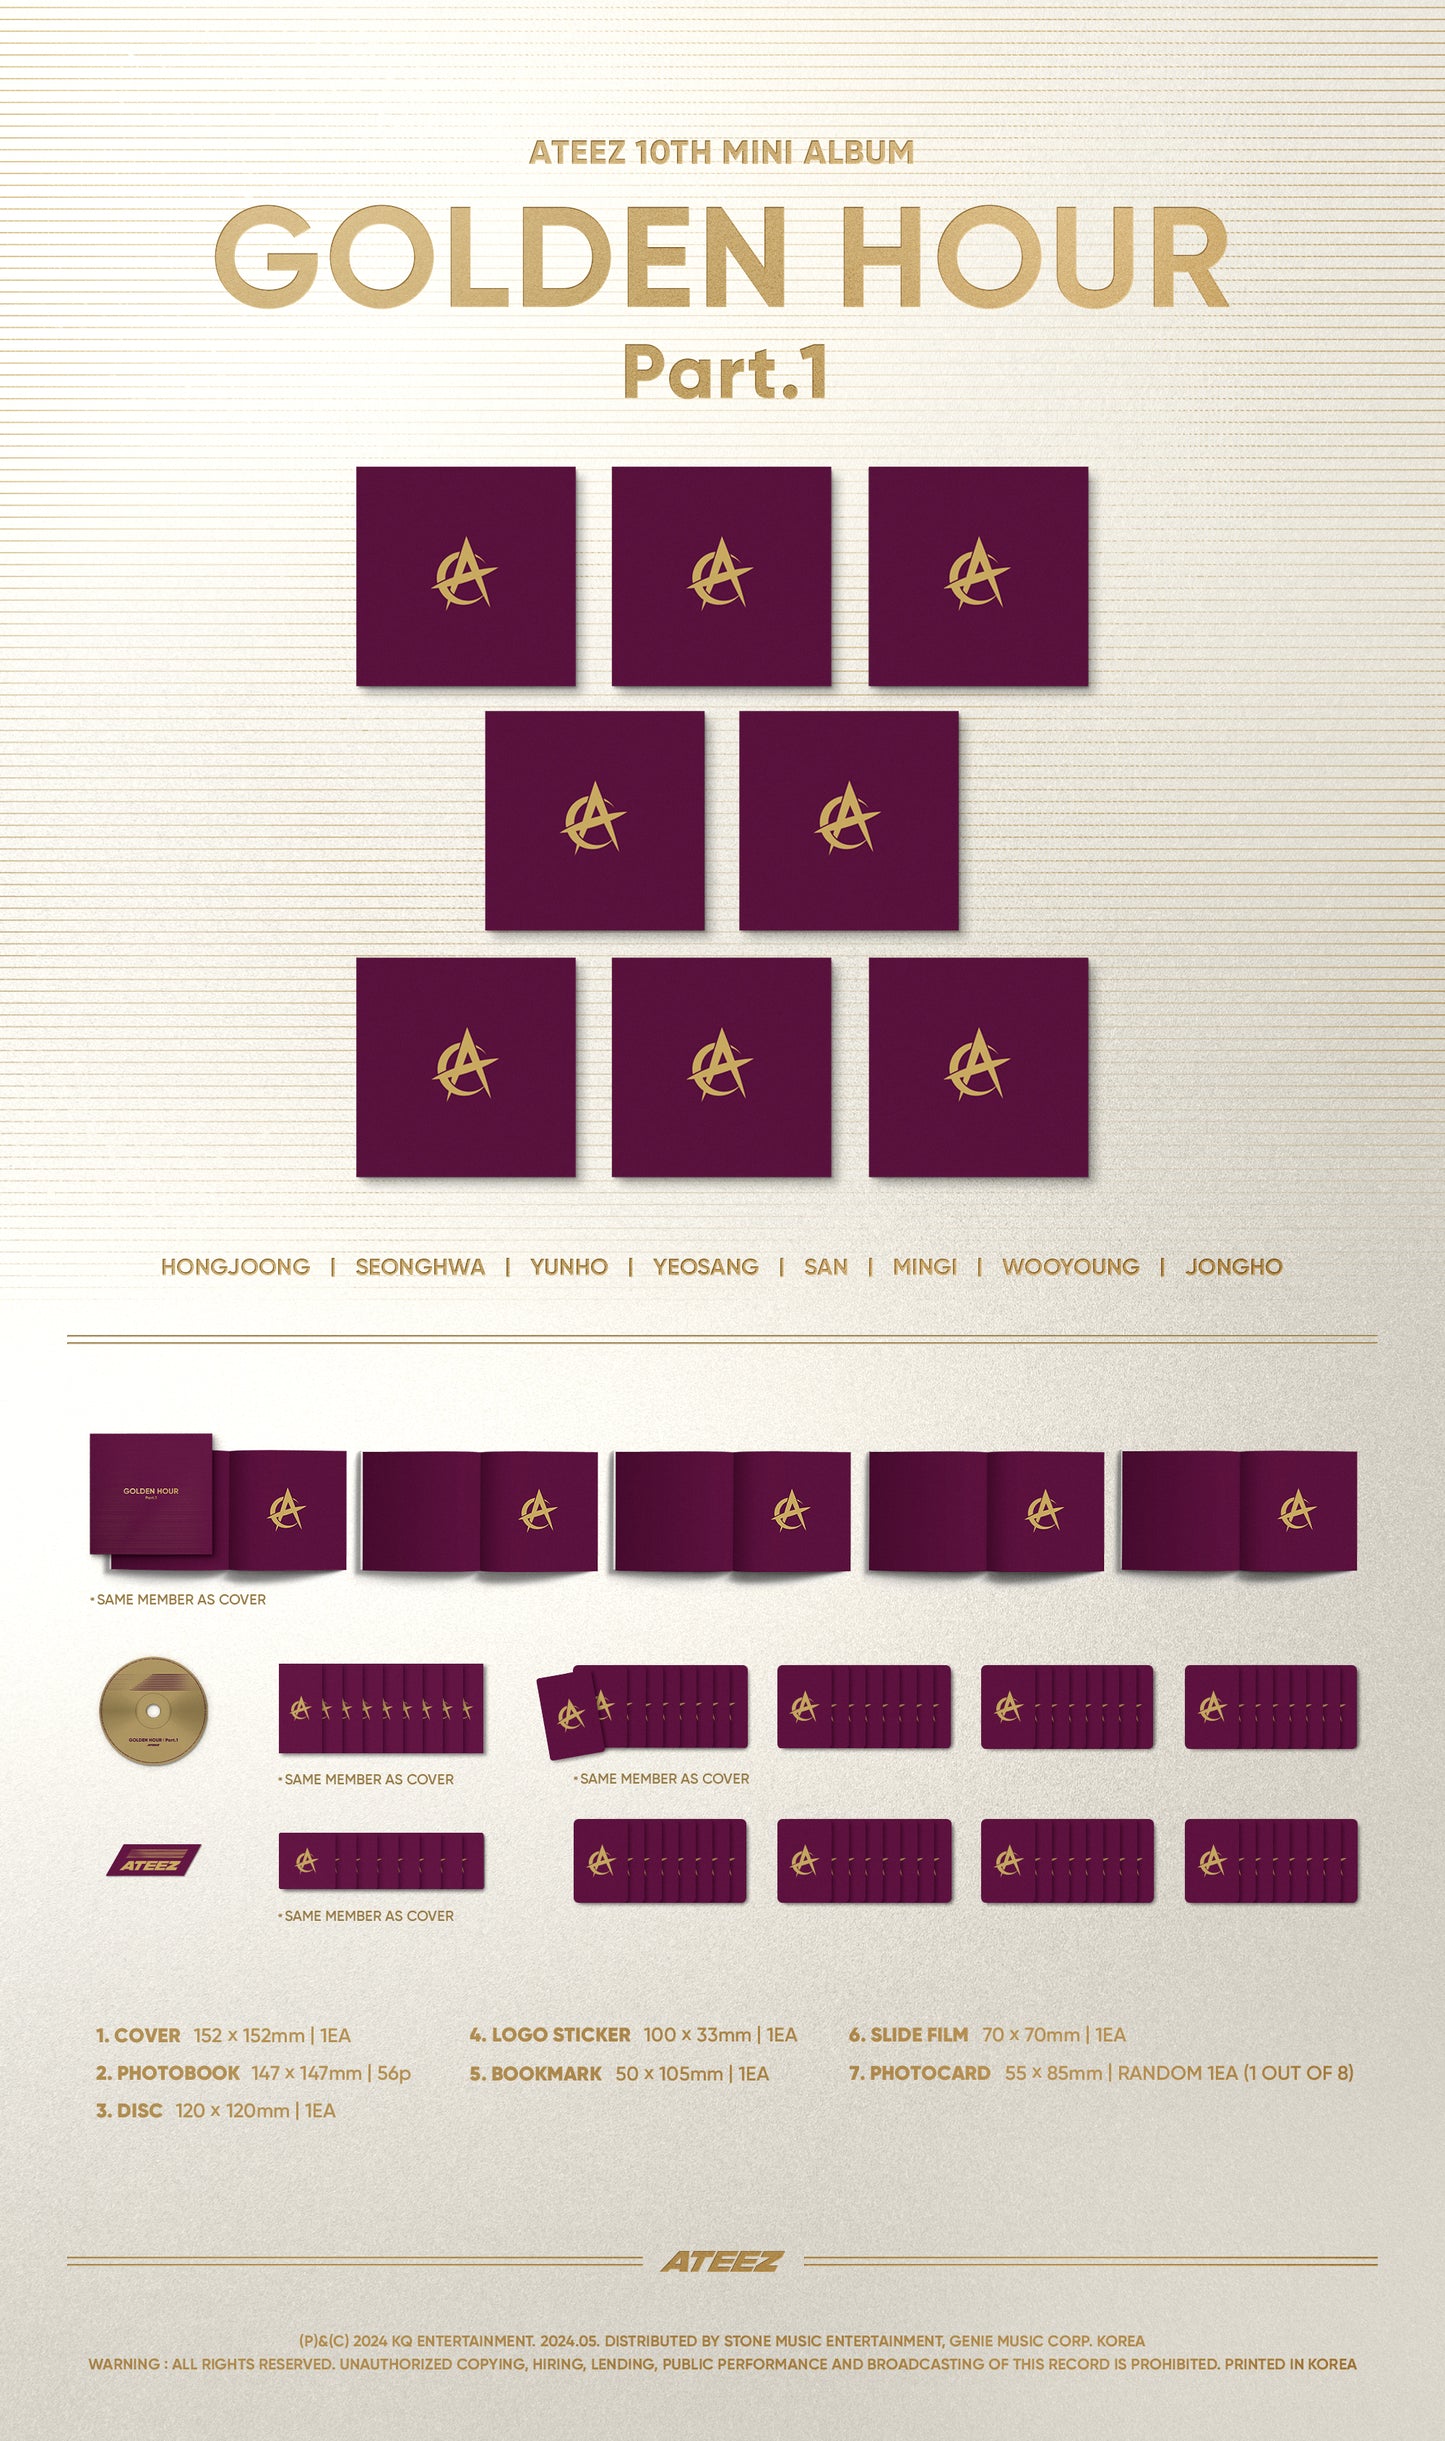 ATEEZ 에이티즈 - 10th Mini-Album 'GOLDEN HOUR : Part 1' (Digipak Version) (Korea Ver.)